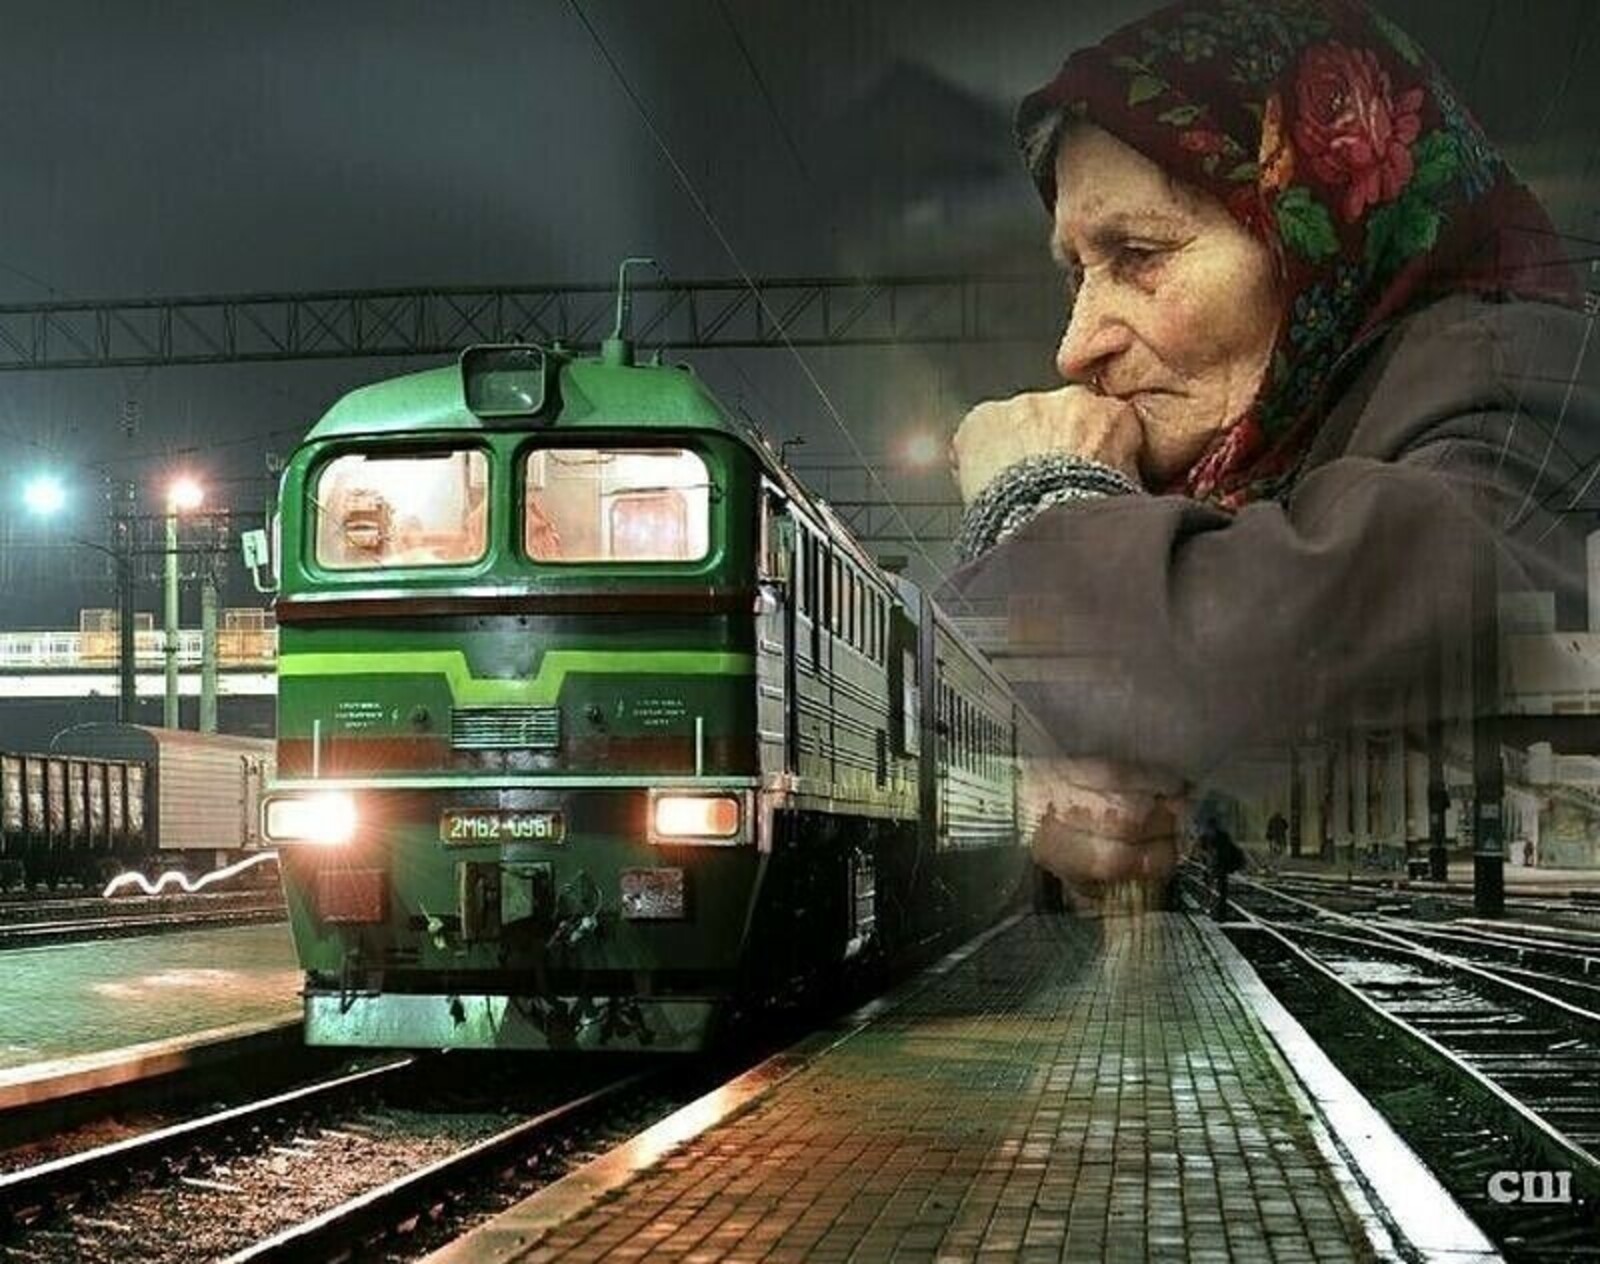 12 поезда мама. Бабушка на вокзале. Старушка на вокзале. Ожидание поезда. Женщина на перроне.